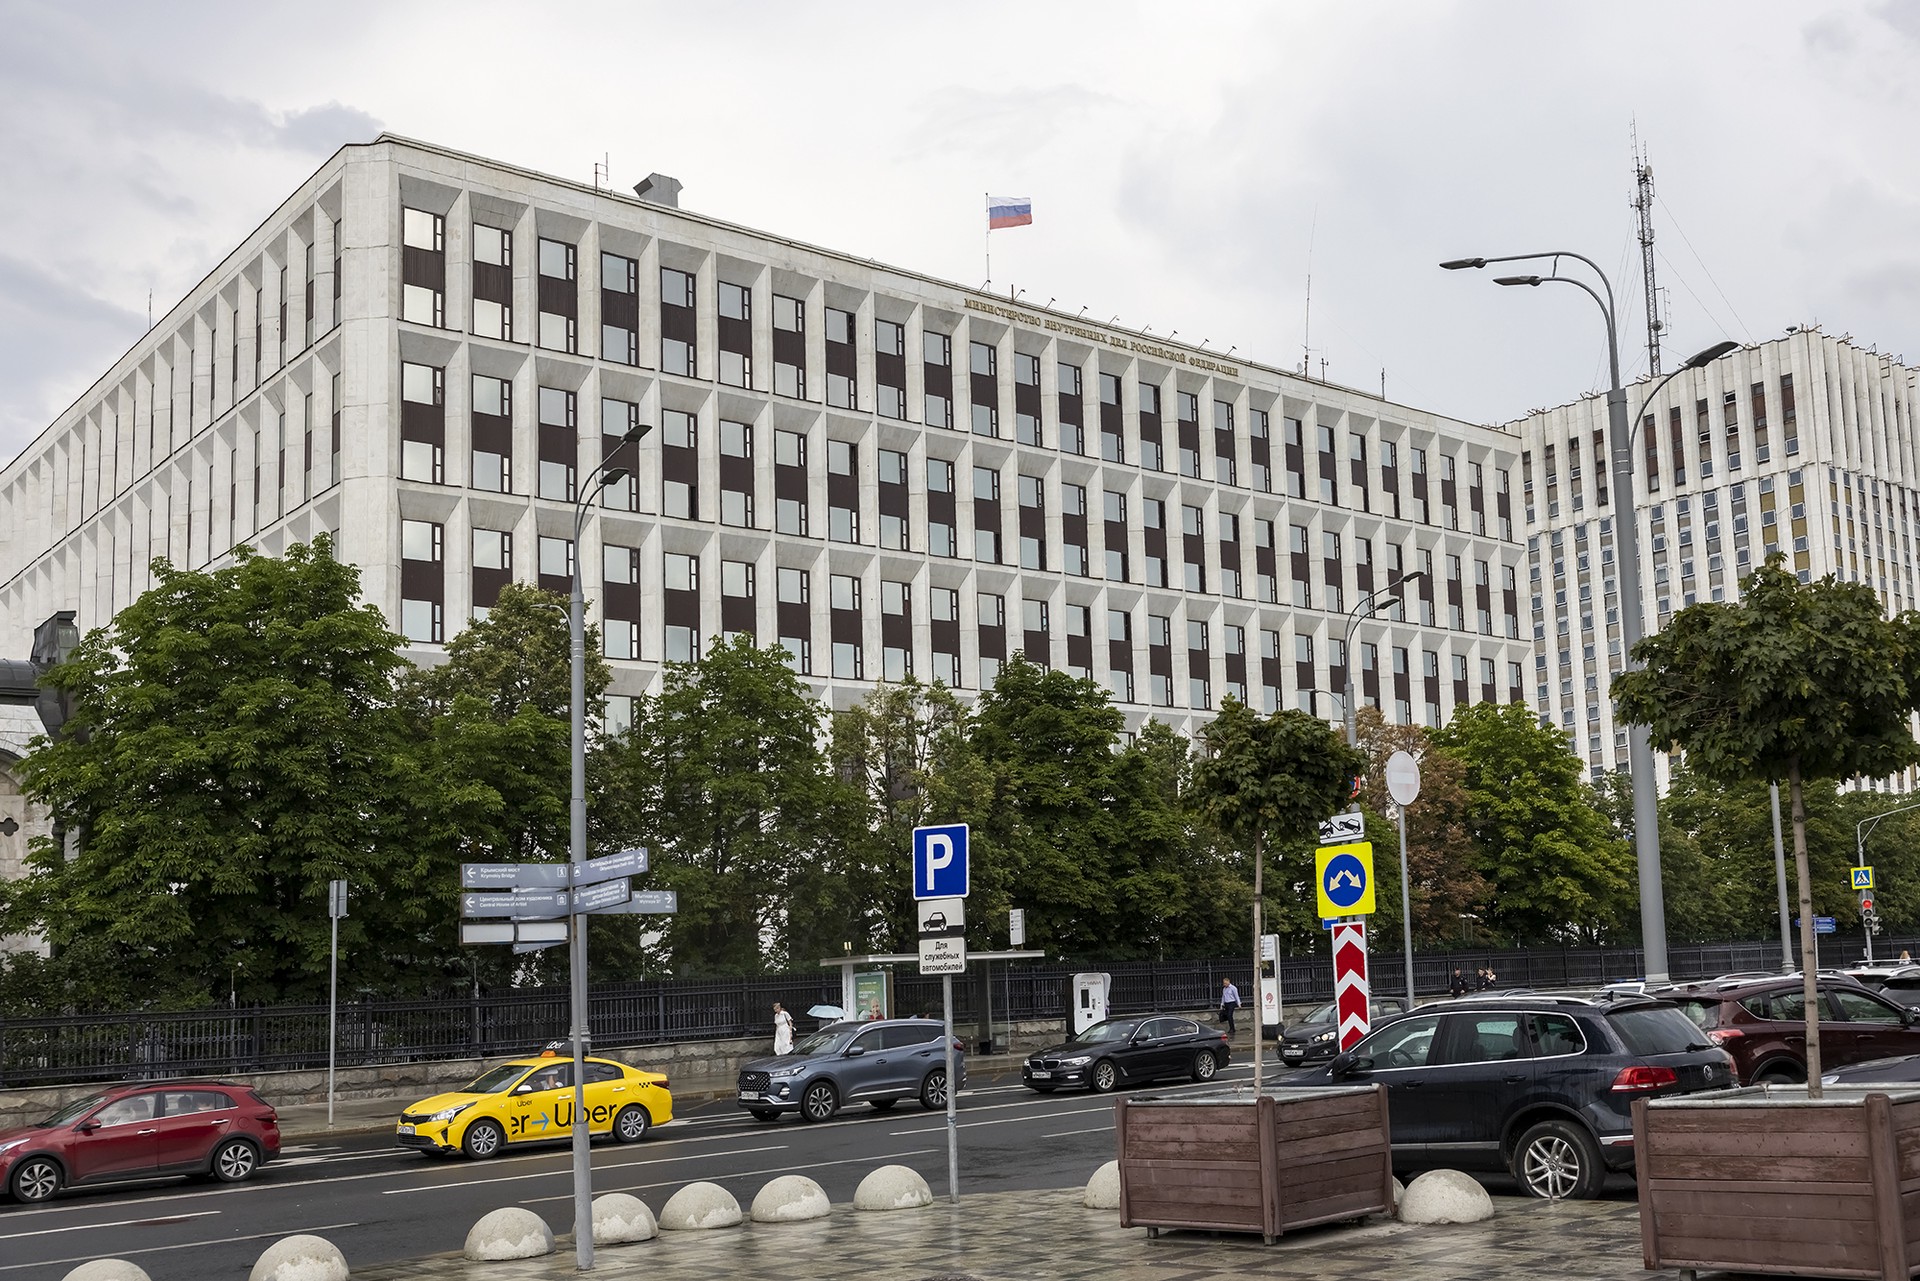 МВД РФ объявило в розыск главу Международного уголовного суда